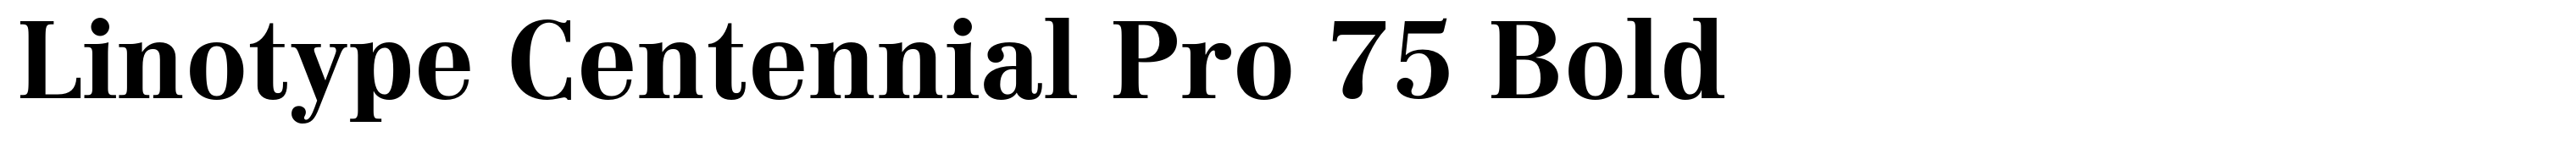 Linotype Centennial Pro 75 Bold